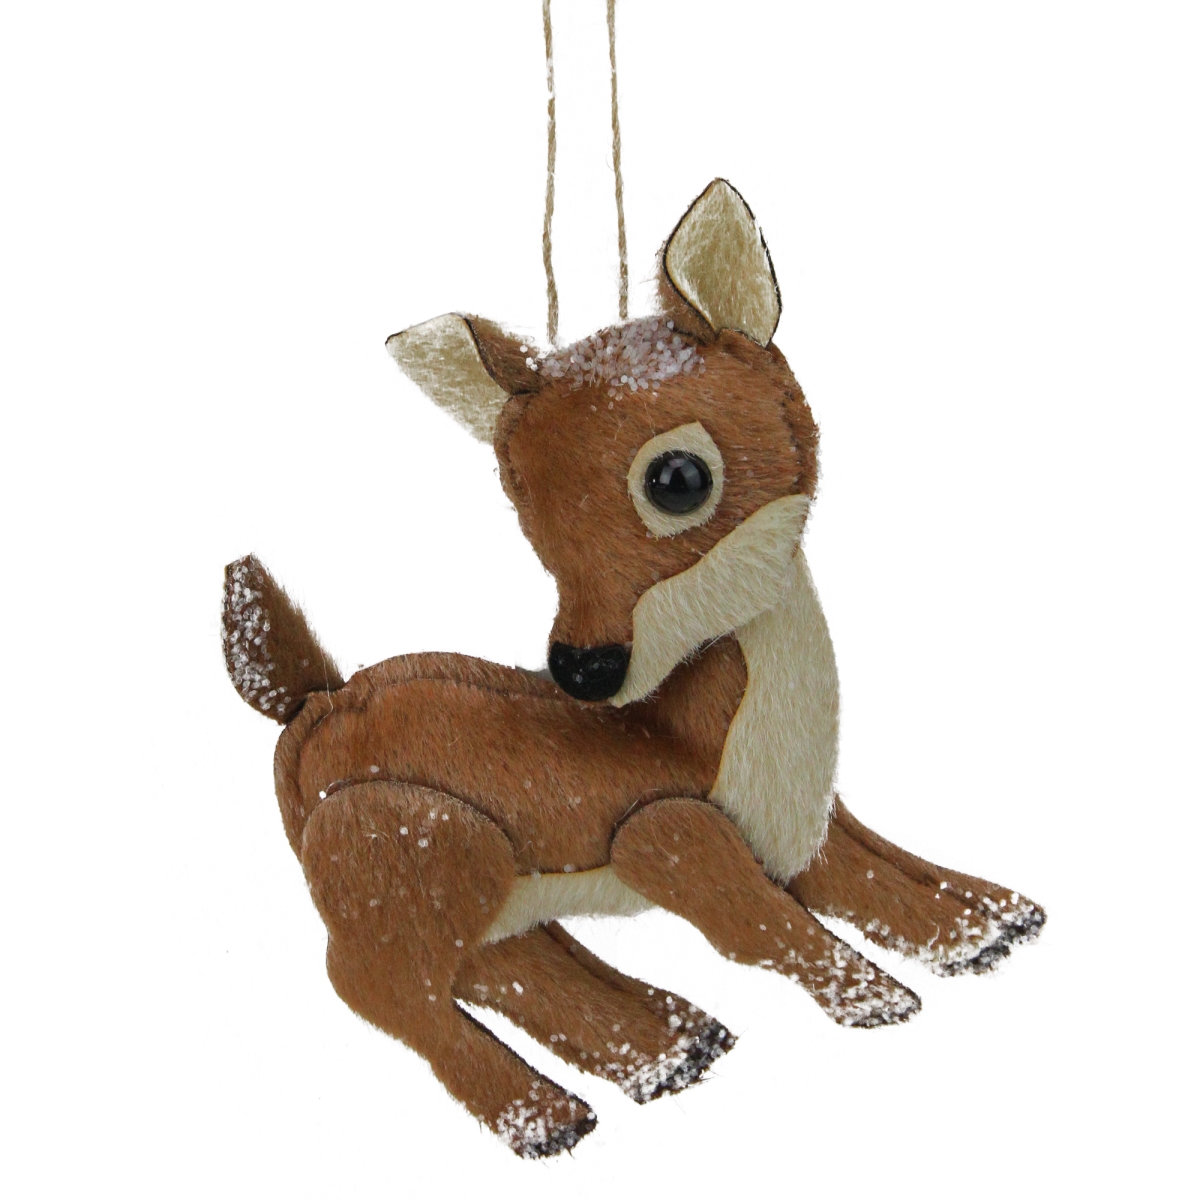 32915399 6 In. Glittered Brown & White Plush Stuffed Deer Christmas Ornament